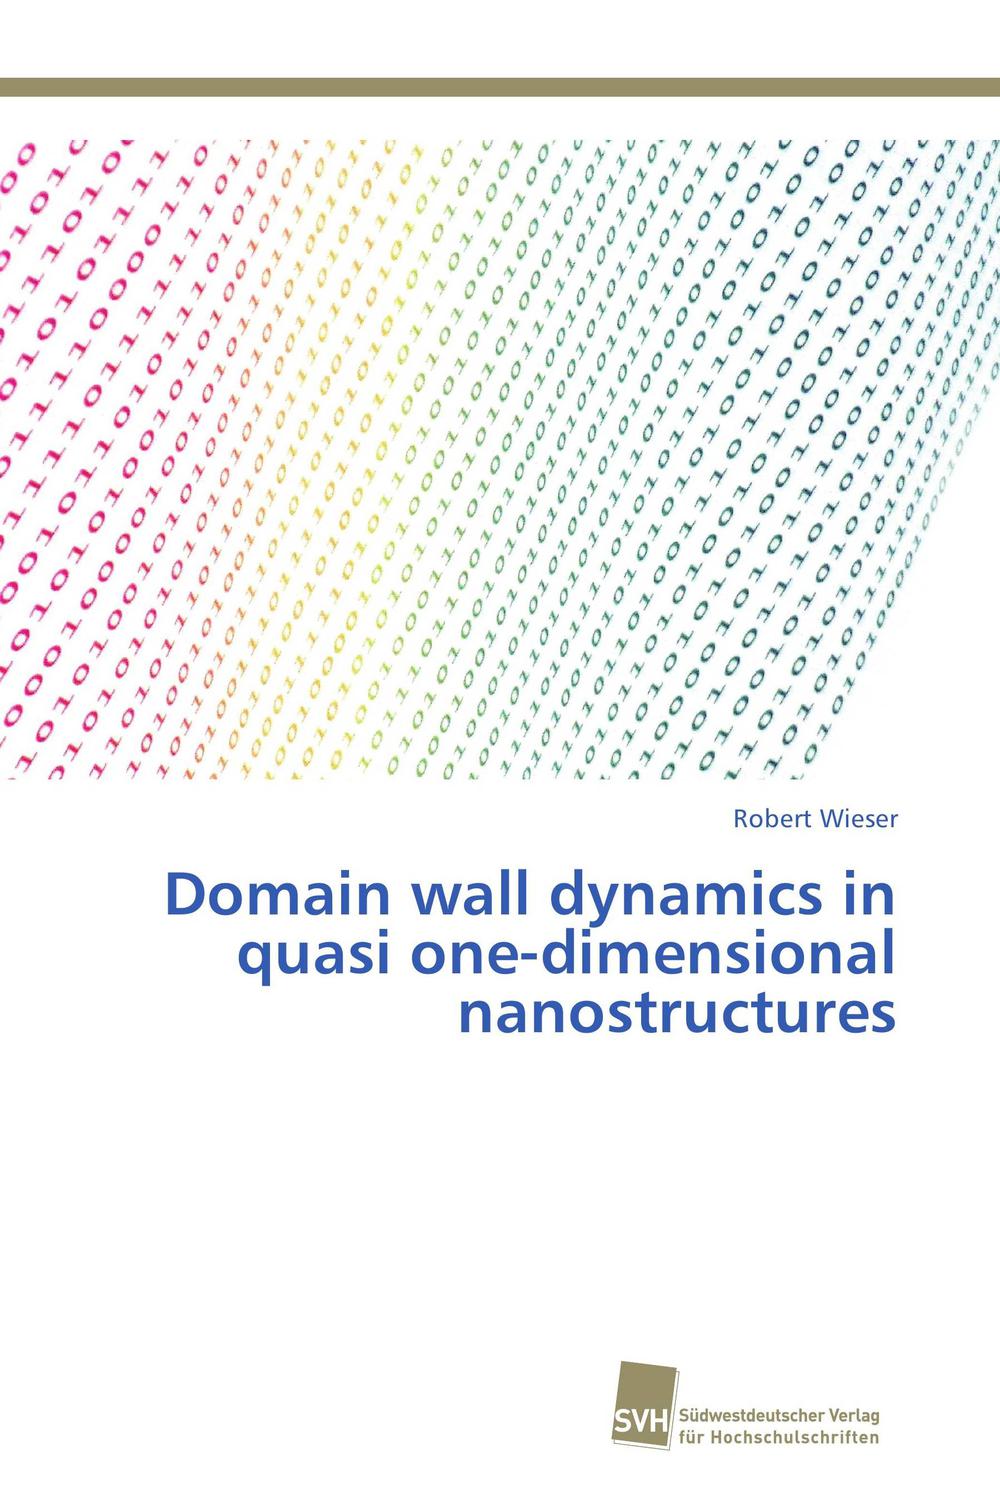 Domain wall dynamics in quasi one-dimensional nanostructures - Robert Wieser